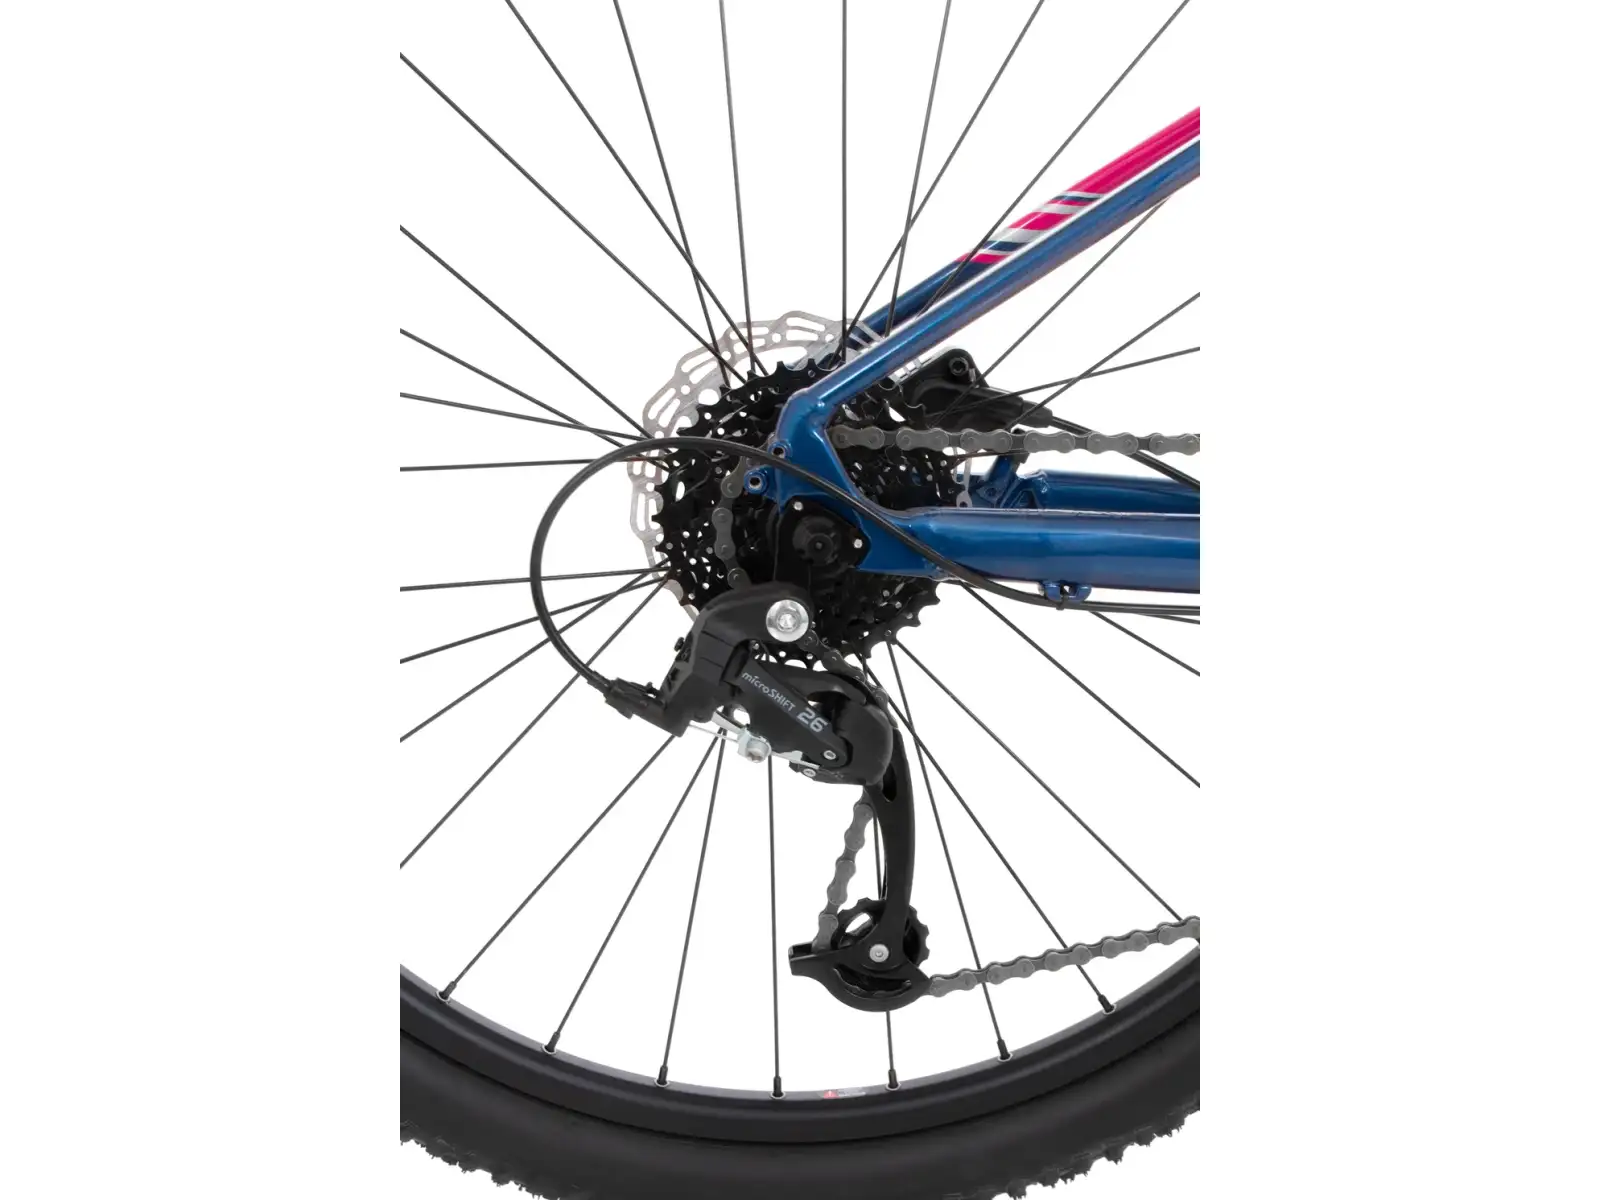 Rock Machine Catherine 70-27 gloss dark blue/pink/silver horský bicykel